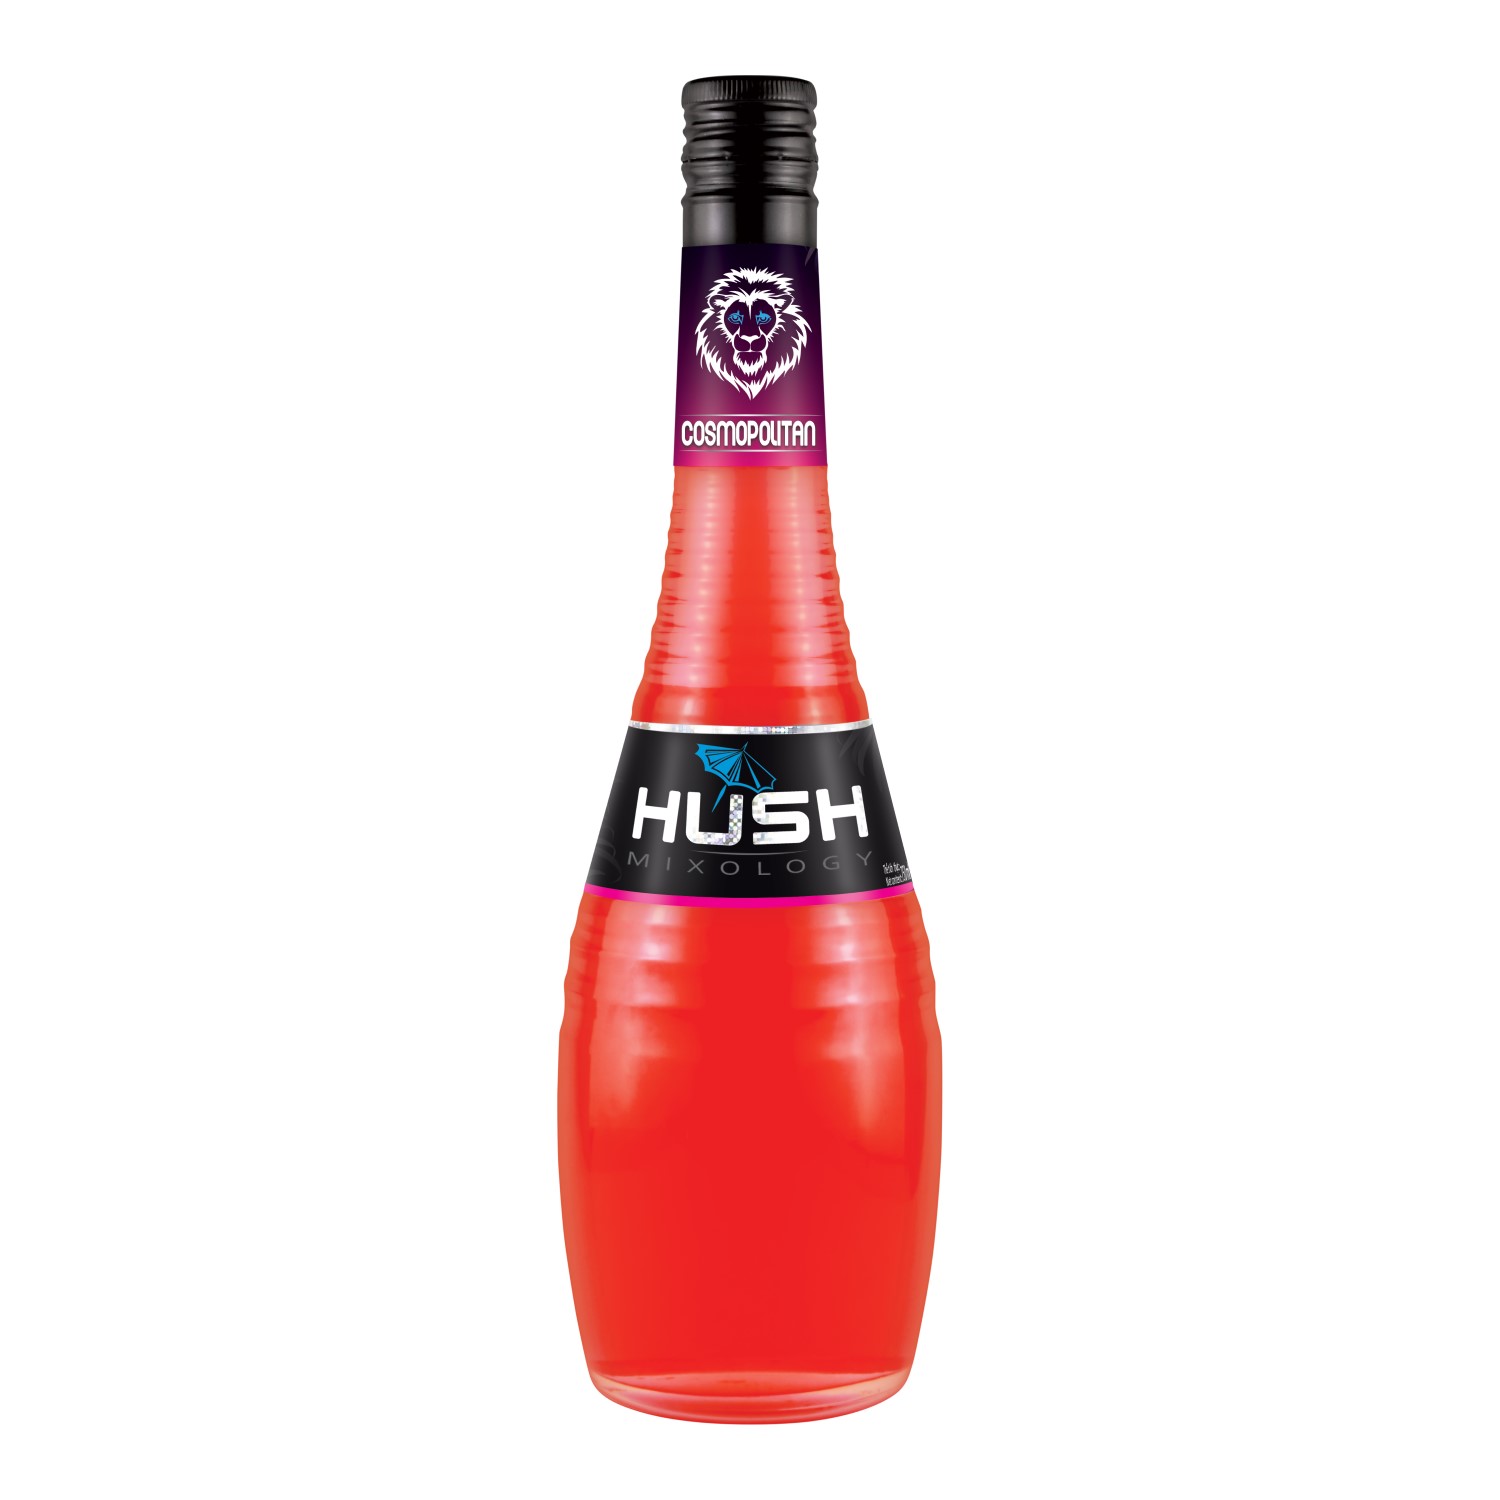 Hush Cocktail Mix Cosmopolitan